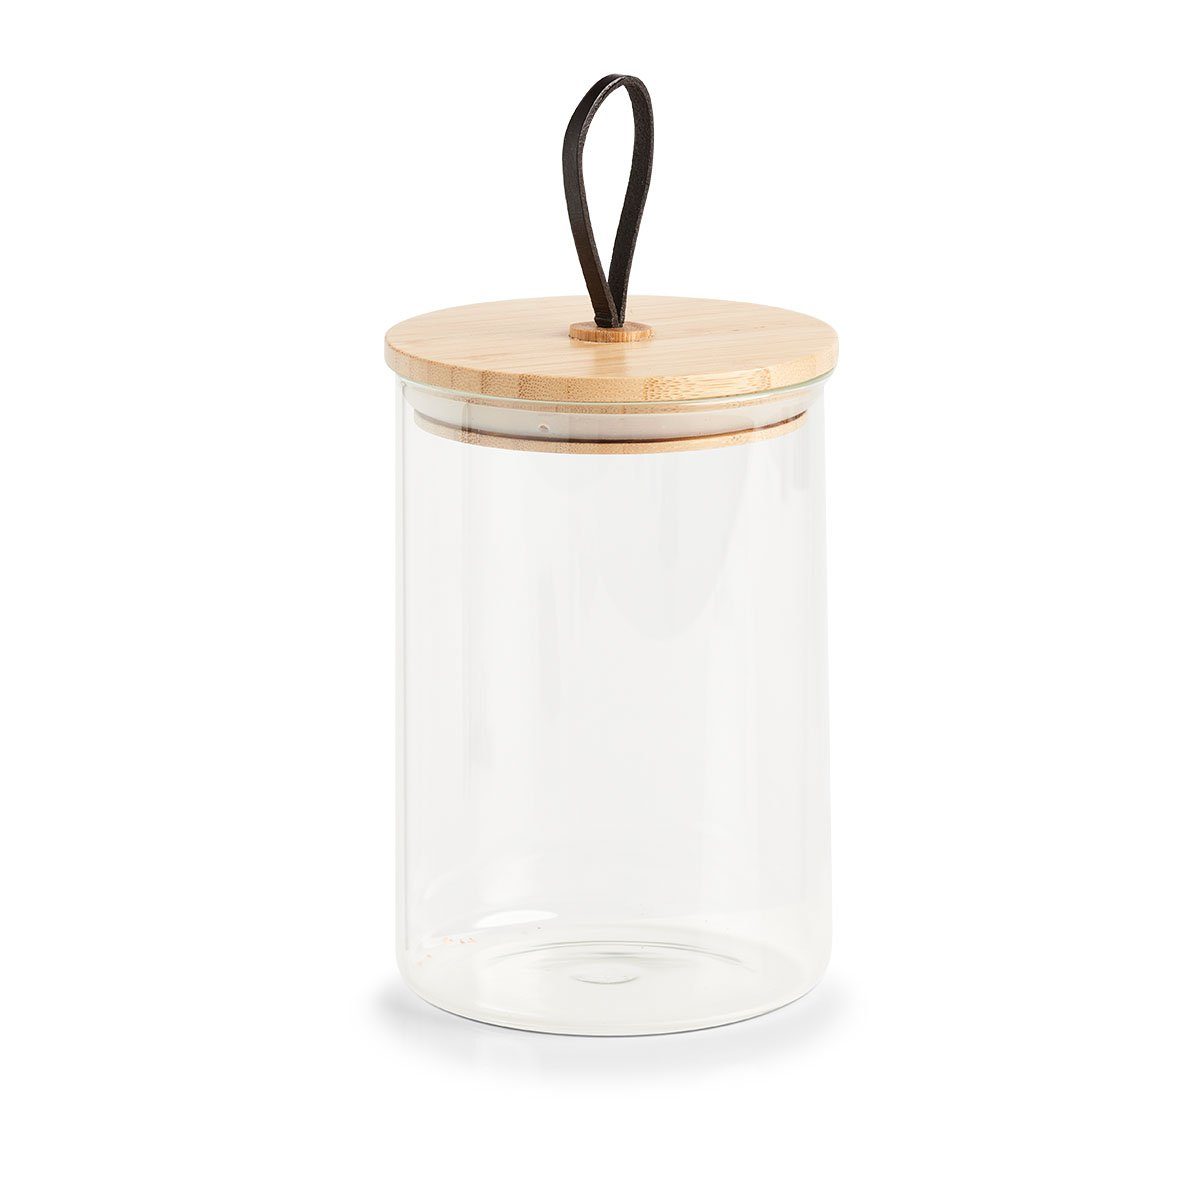 Zeller Present Vorratsglas Vorratsglas m. Bambusdeckel, Borosilikat Glas / Silikon / Bambus, 1100 ml, Borosilikat Glas / Silikon / Bambus, transparent, Ø11,2 x 16,3 cm